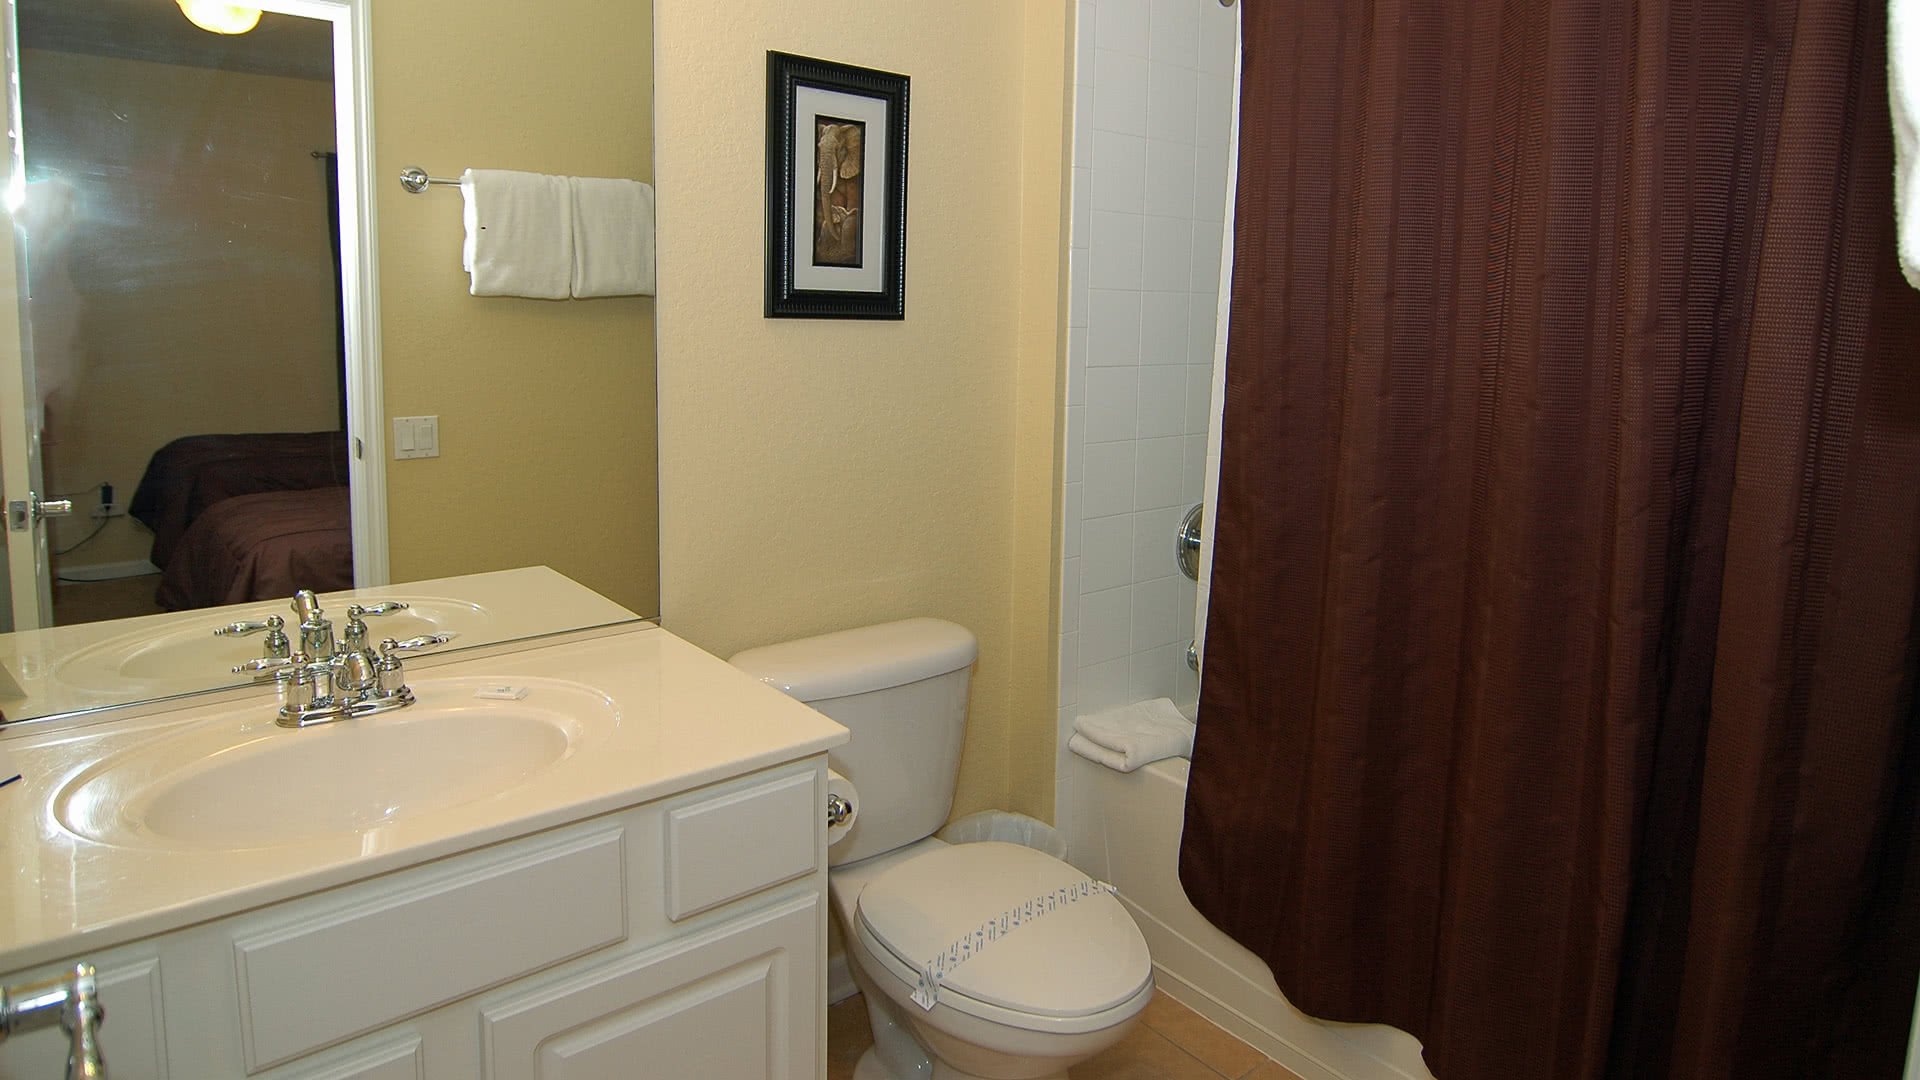 Twin Suite Bathroom 4
Tub/Shower Combo